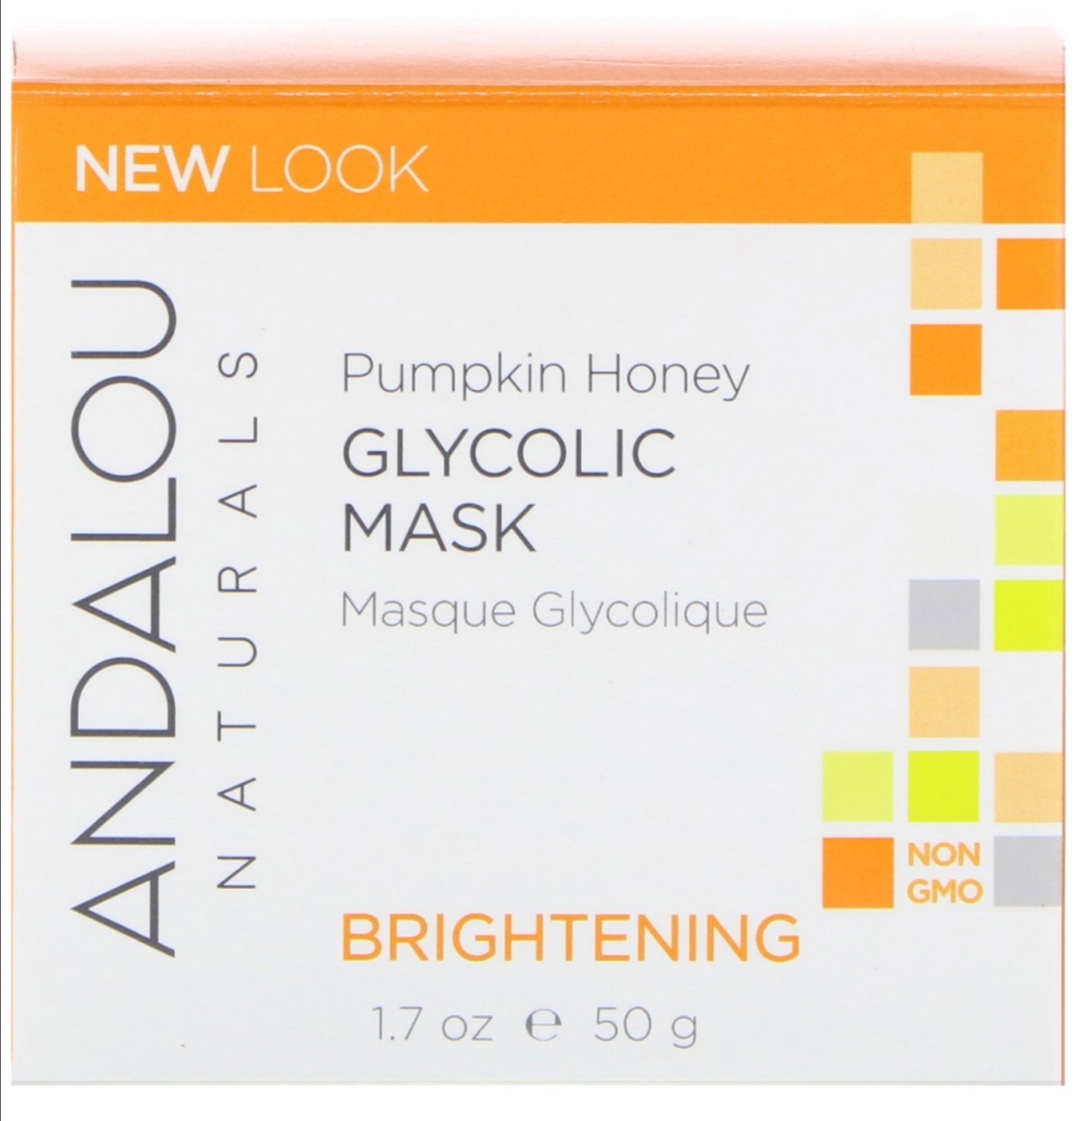 Andalou Naturals, Glycolic Mask, Pumpkin Honey, Brightening, 1.7 oz (50 g)